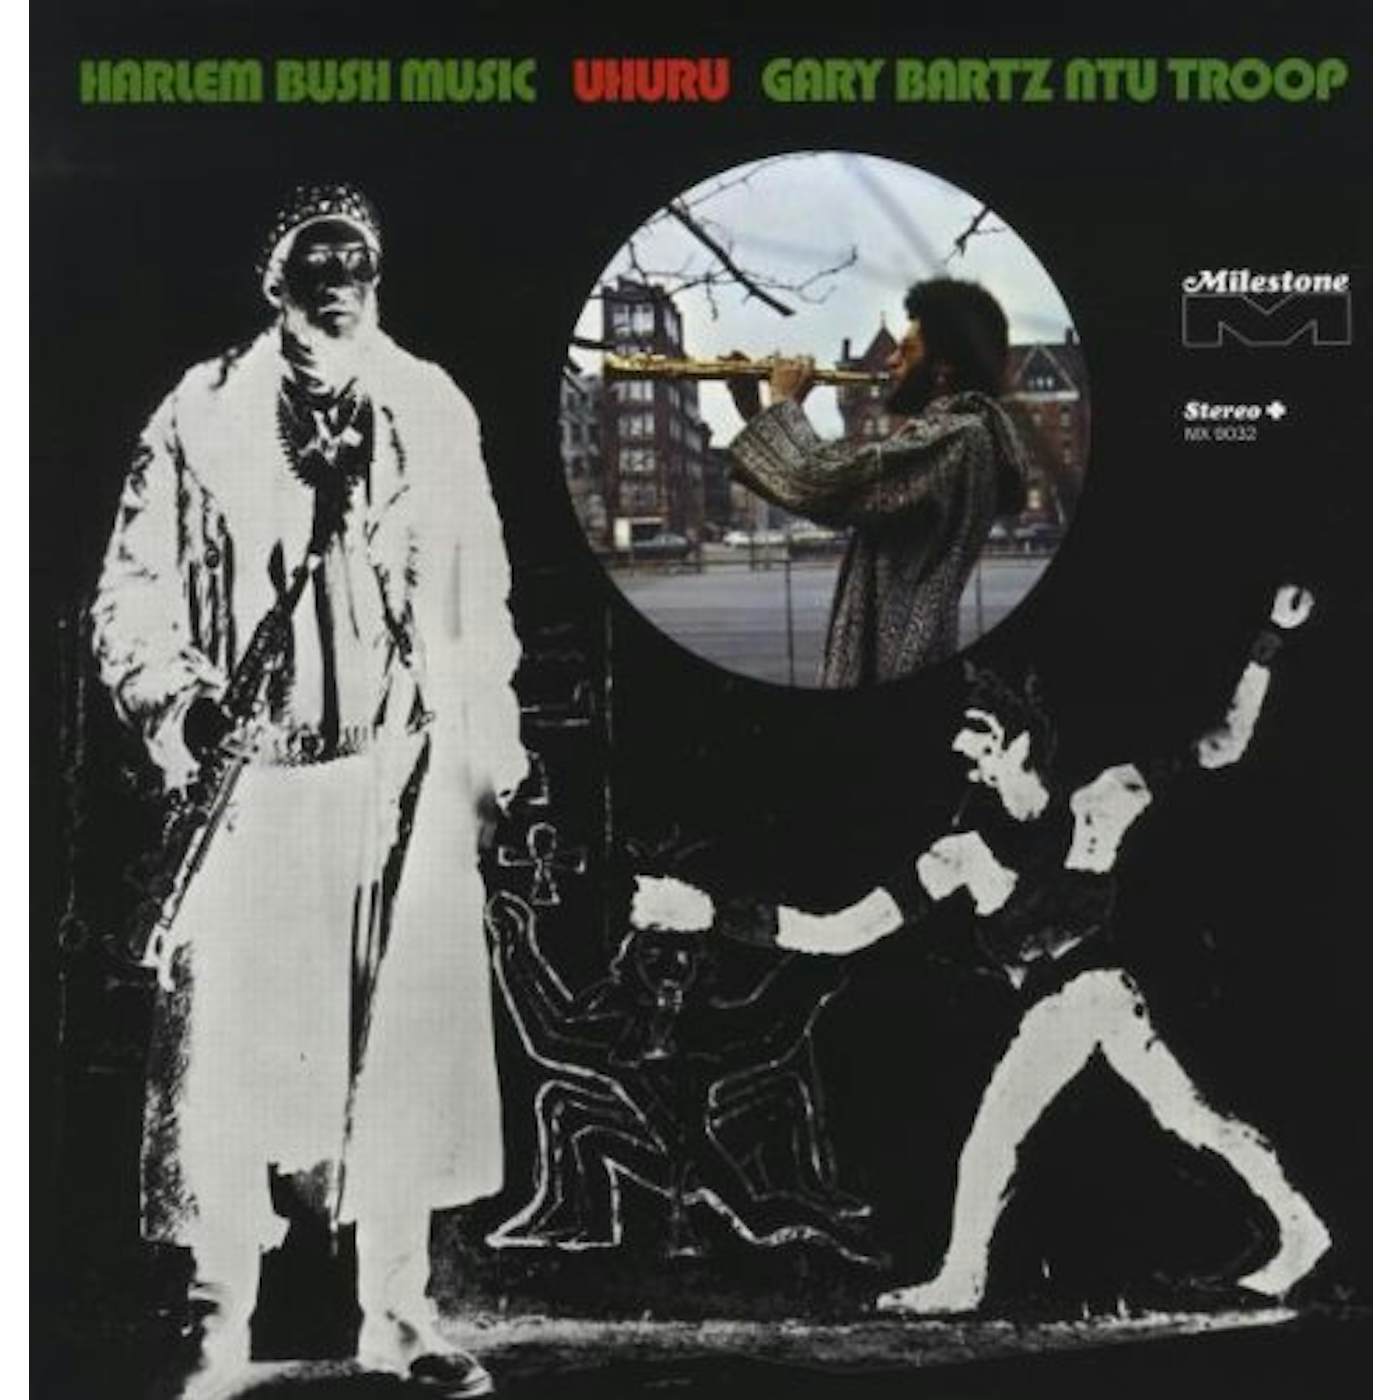 Gary Bartz Ntu Troop HARLEM BUSH MUSIC UHURU Vinyl Record